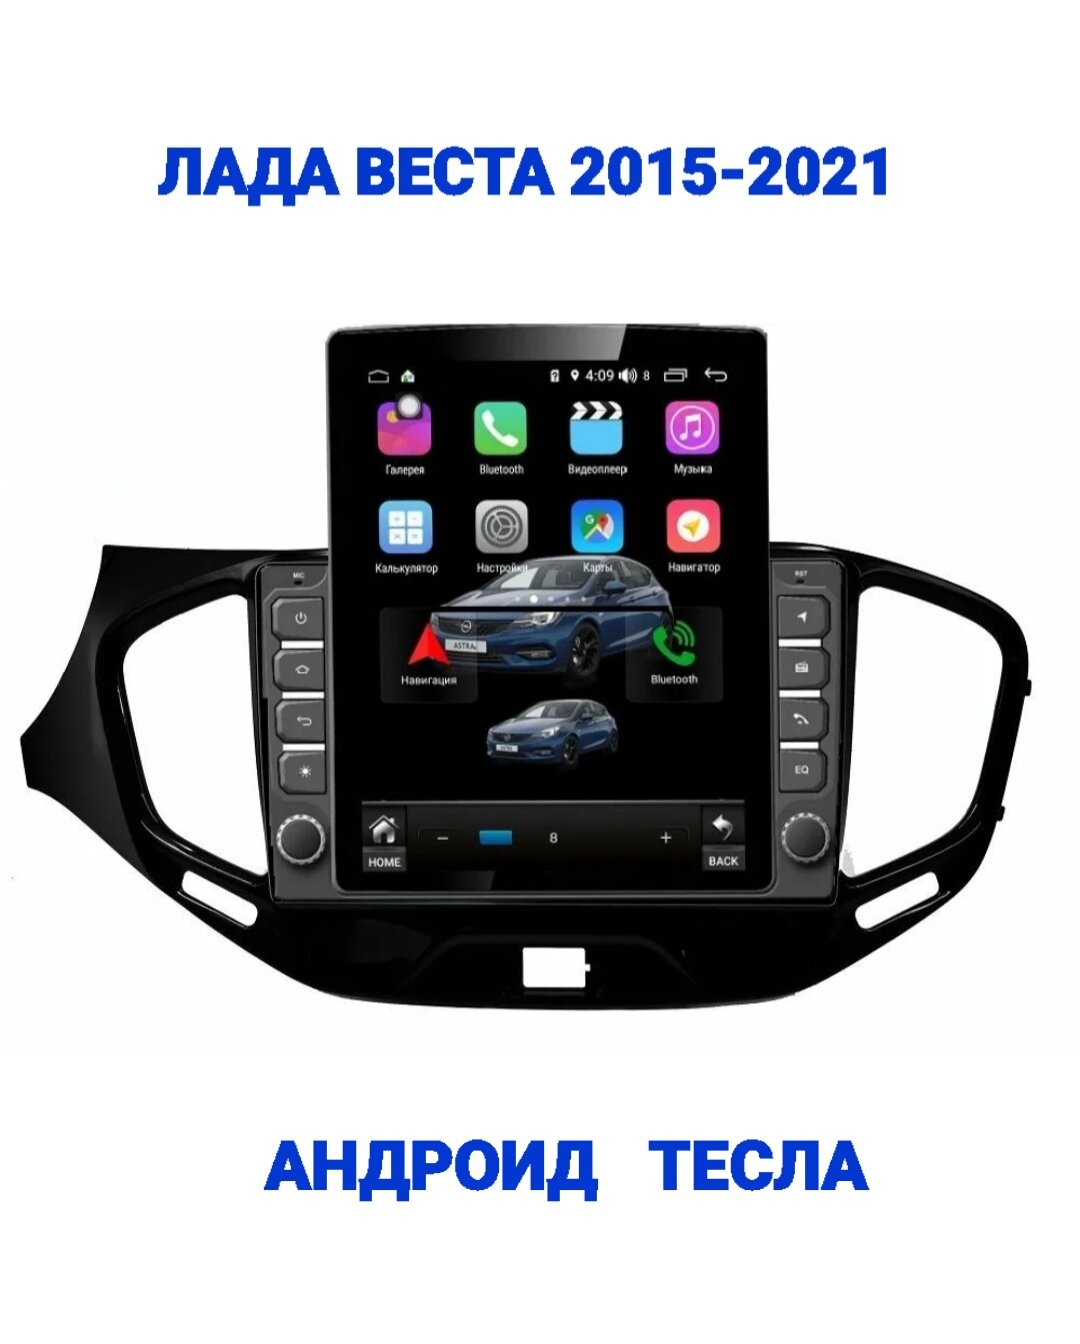 Магнитола Тесла (Tesla) память 4/64гб, 8-ядерная, сим-карта 4G, Блютуз, WiFi, GPS, USB, DSP, CarPlay, андроид 13, для Лада Веста (Lada Vesta) 2015-2021г